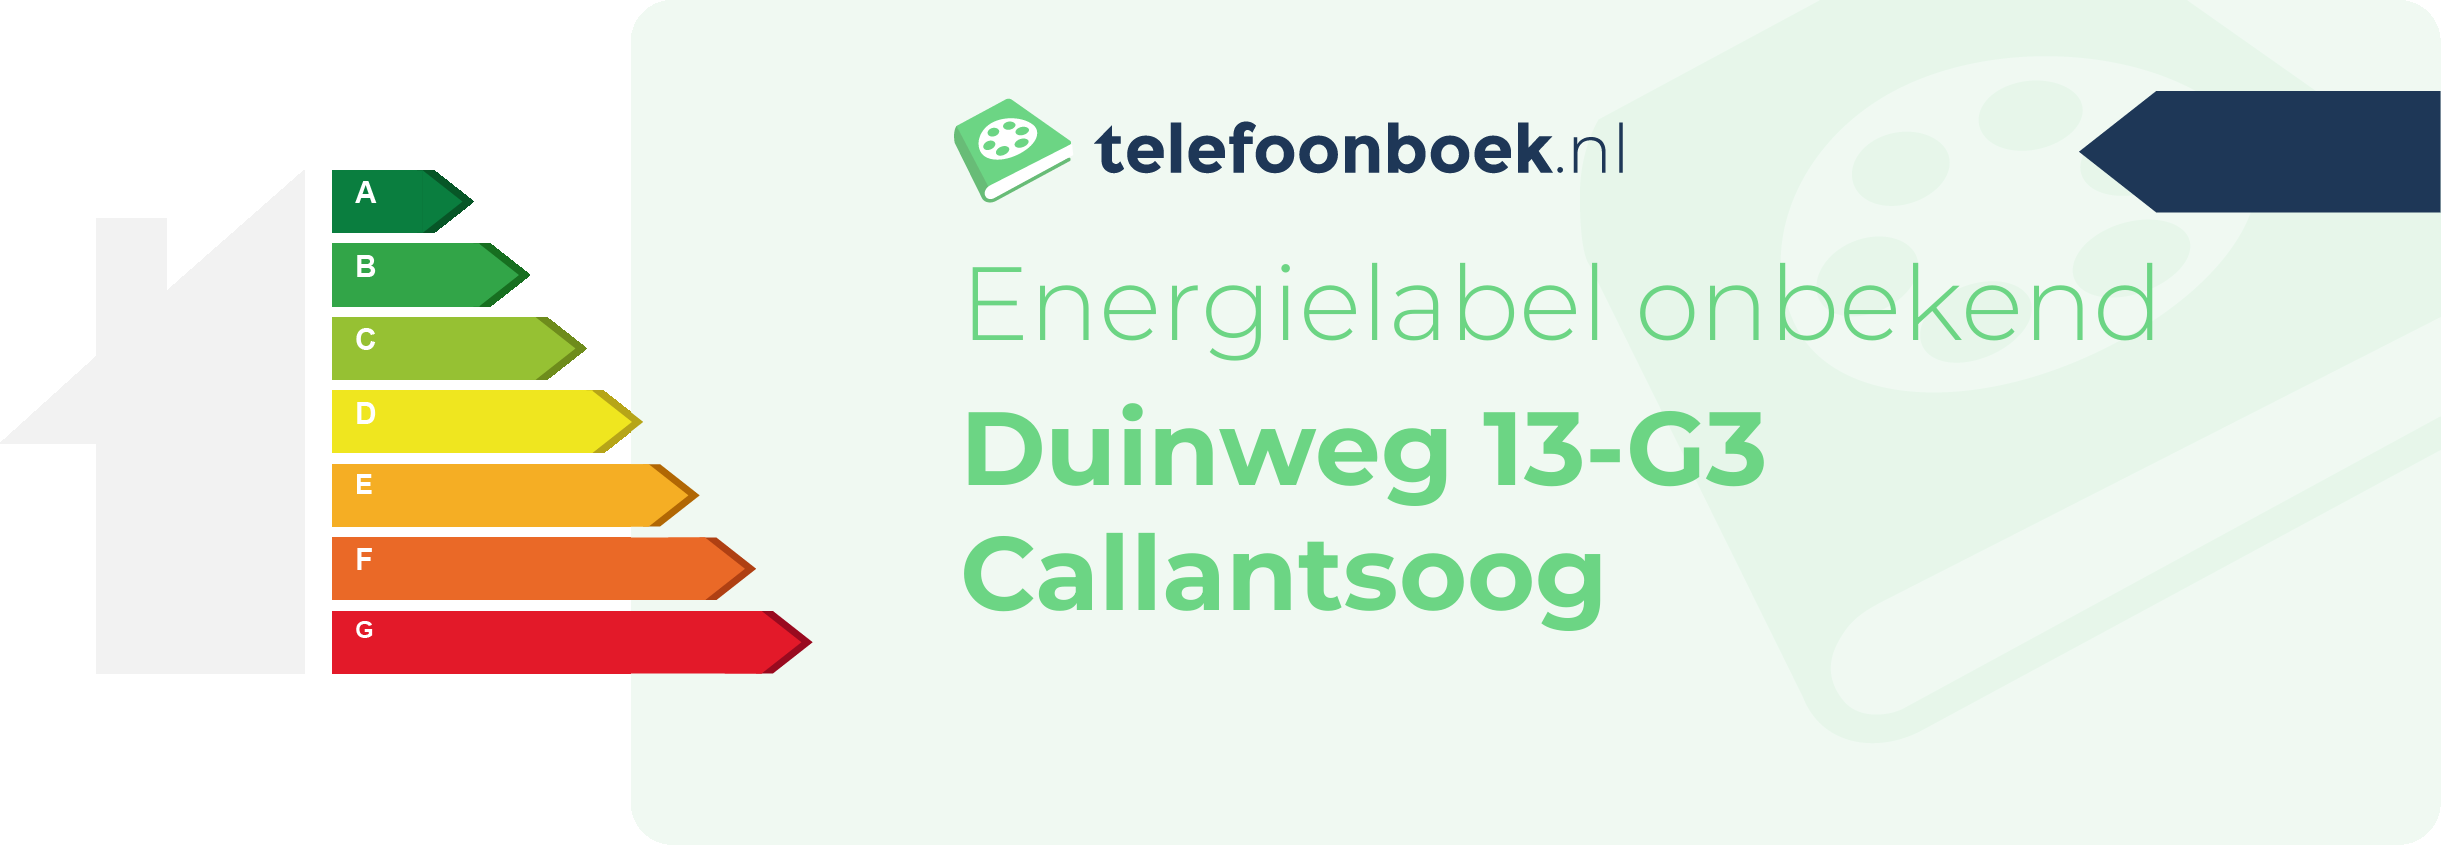 Energielabel Duinweg 13-G3 Callantsoog